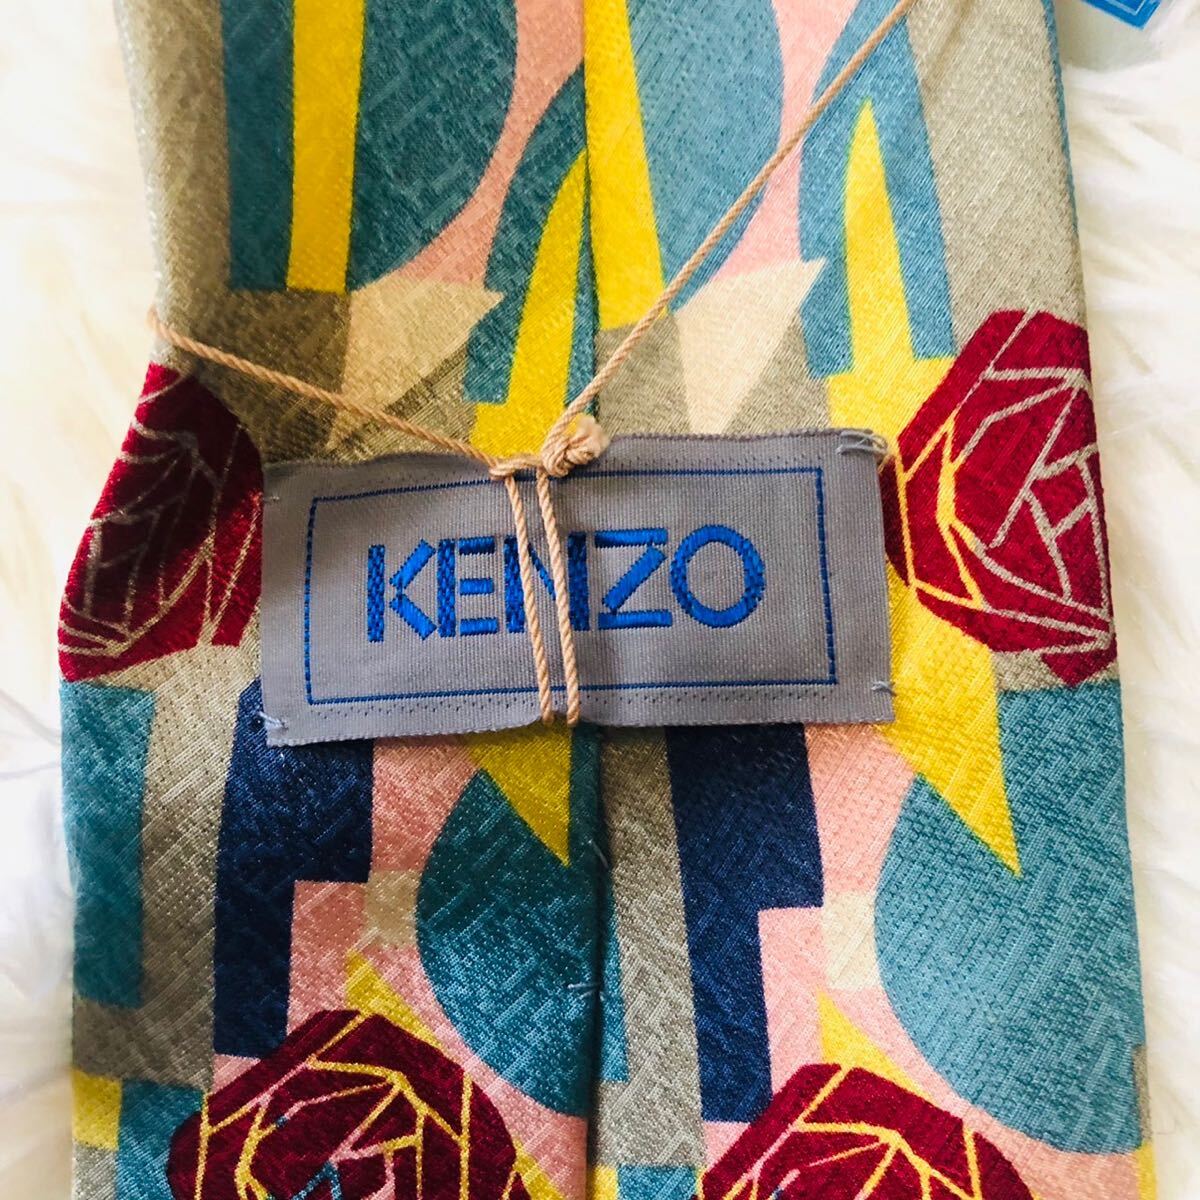 KENZO ケンゾー メンズ 男性 紳士 ネクタイ 総柄 花柄 ブルー 赤 青 マルチカラー ビジネス 結婚式 新品未使用 新品 未使用 剣先9.5cm_画像4